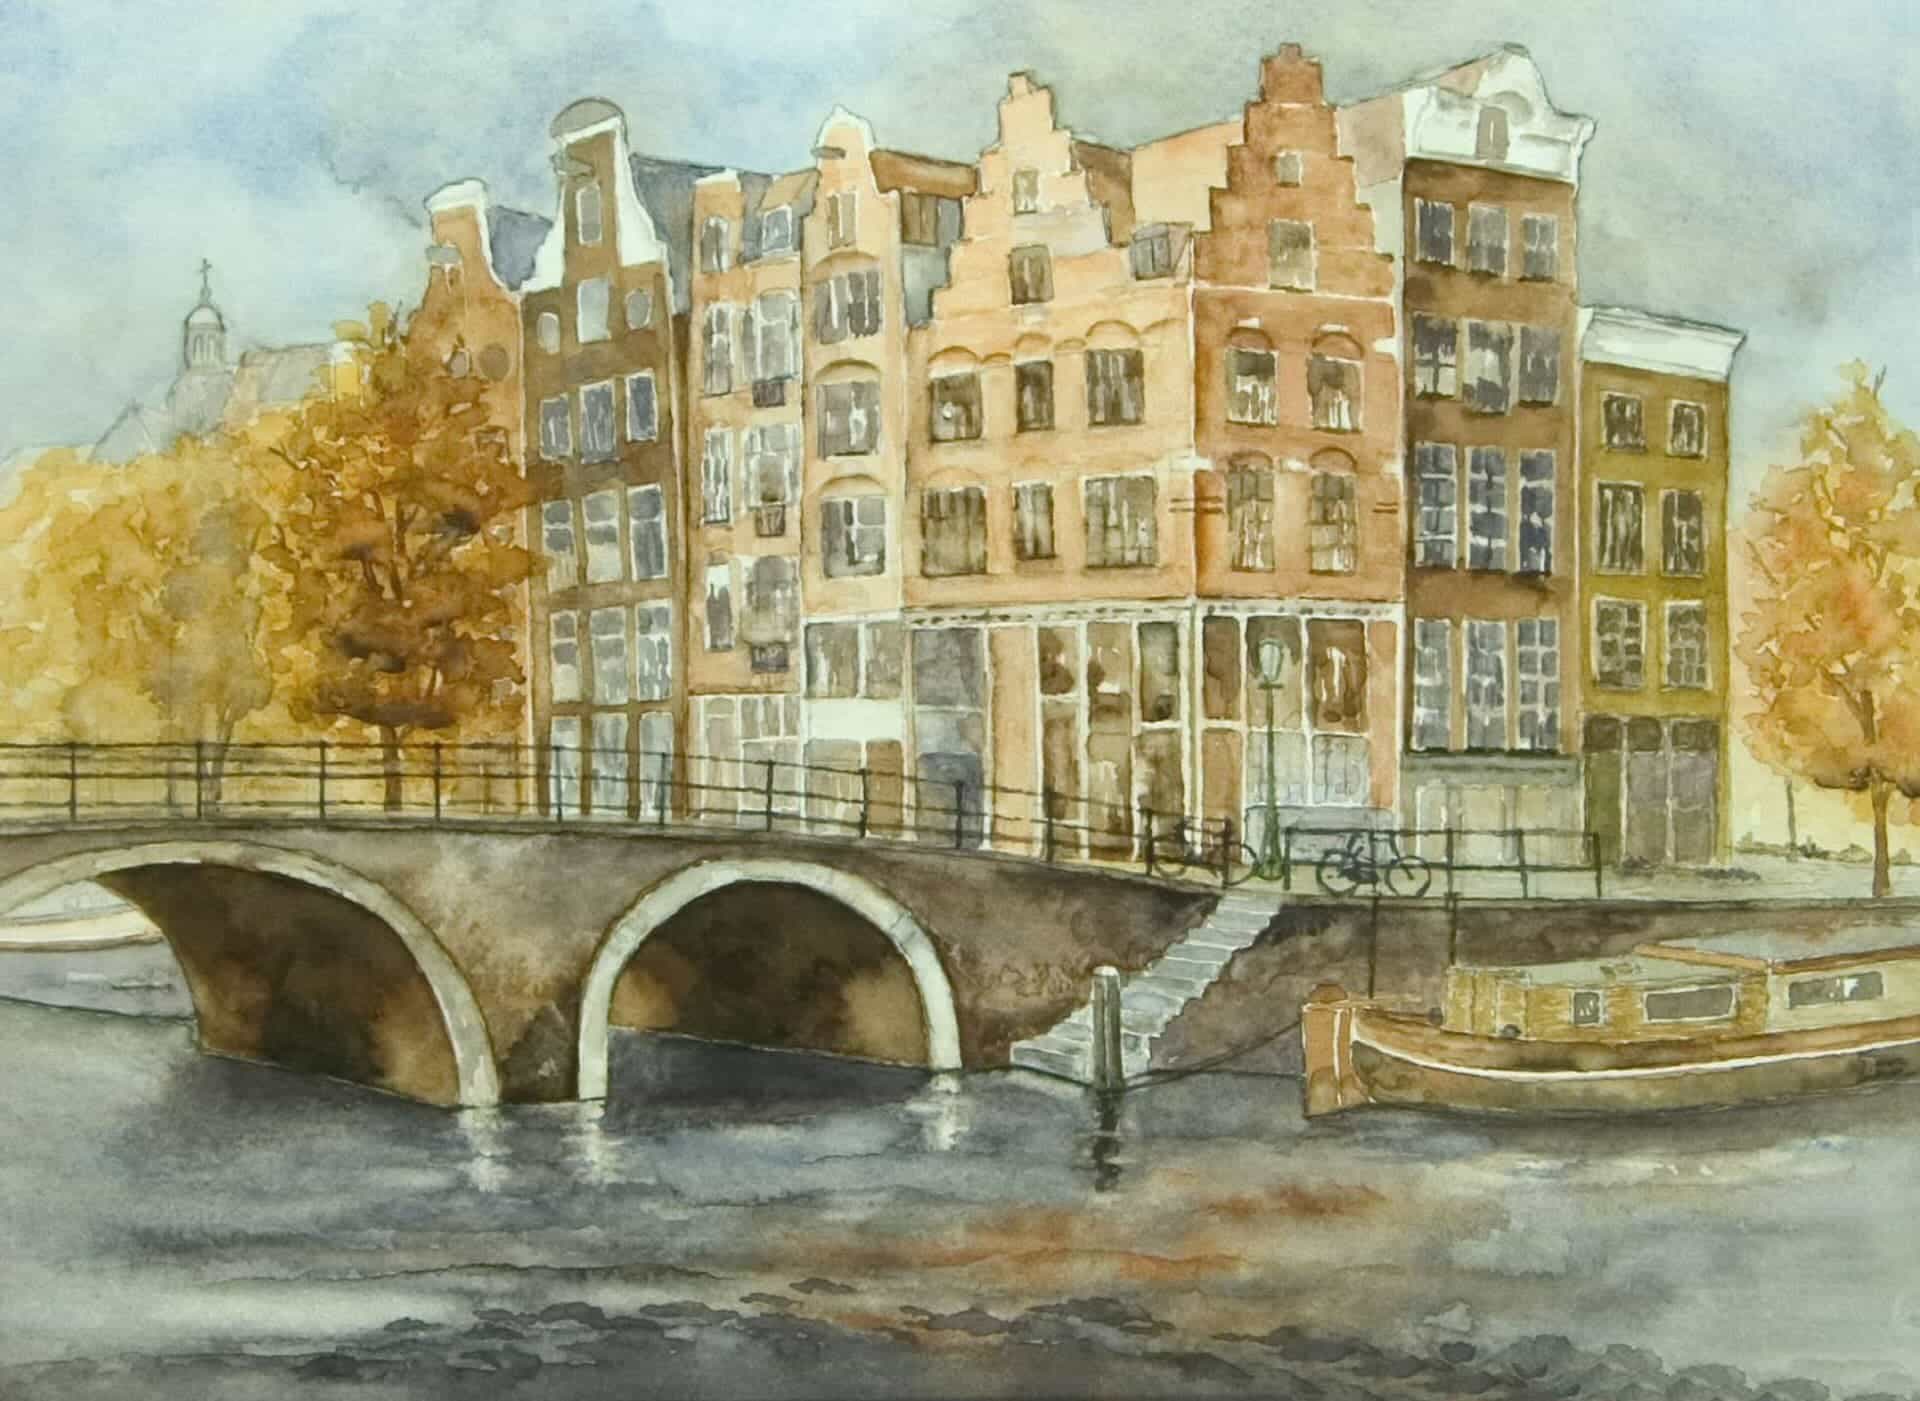 Amsterdam Prinsengracht - 2001